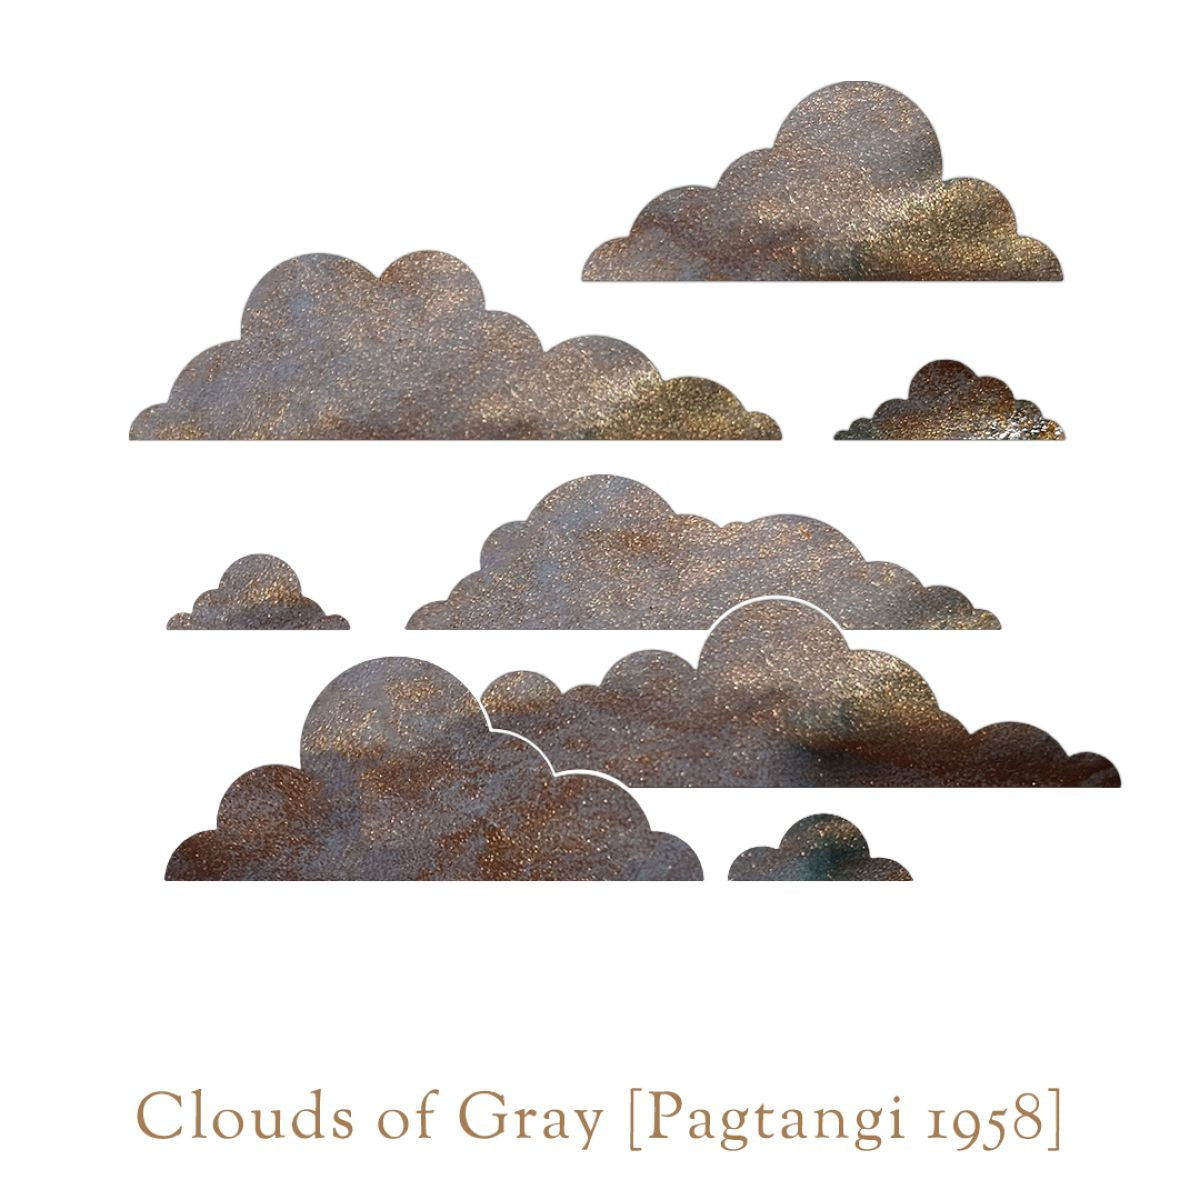 Vinta Inks - Clouds of Gray (Pagtangi 1958)